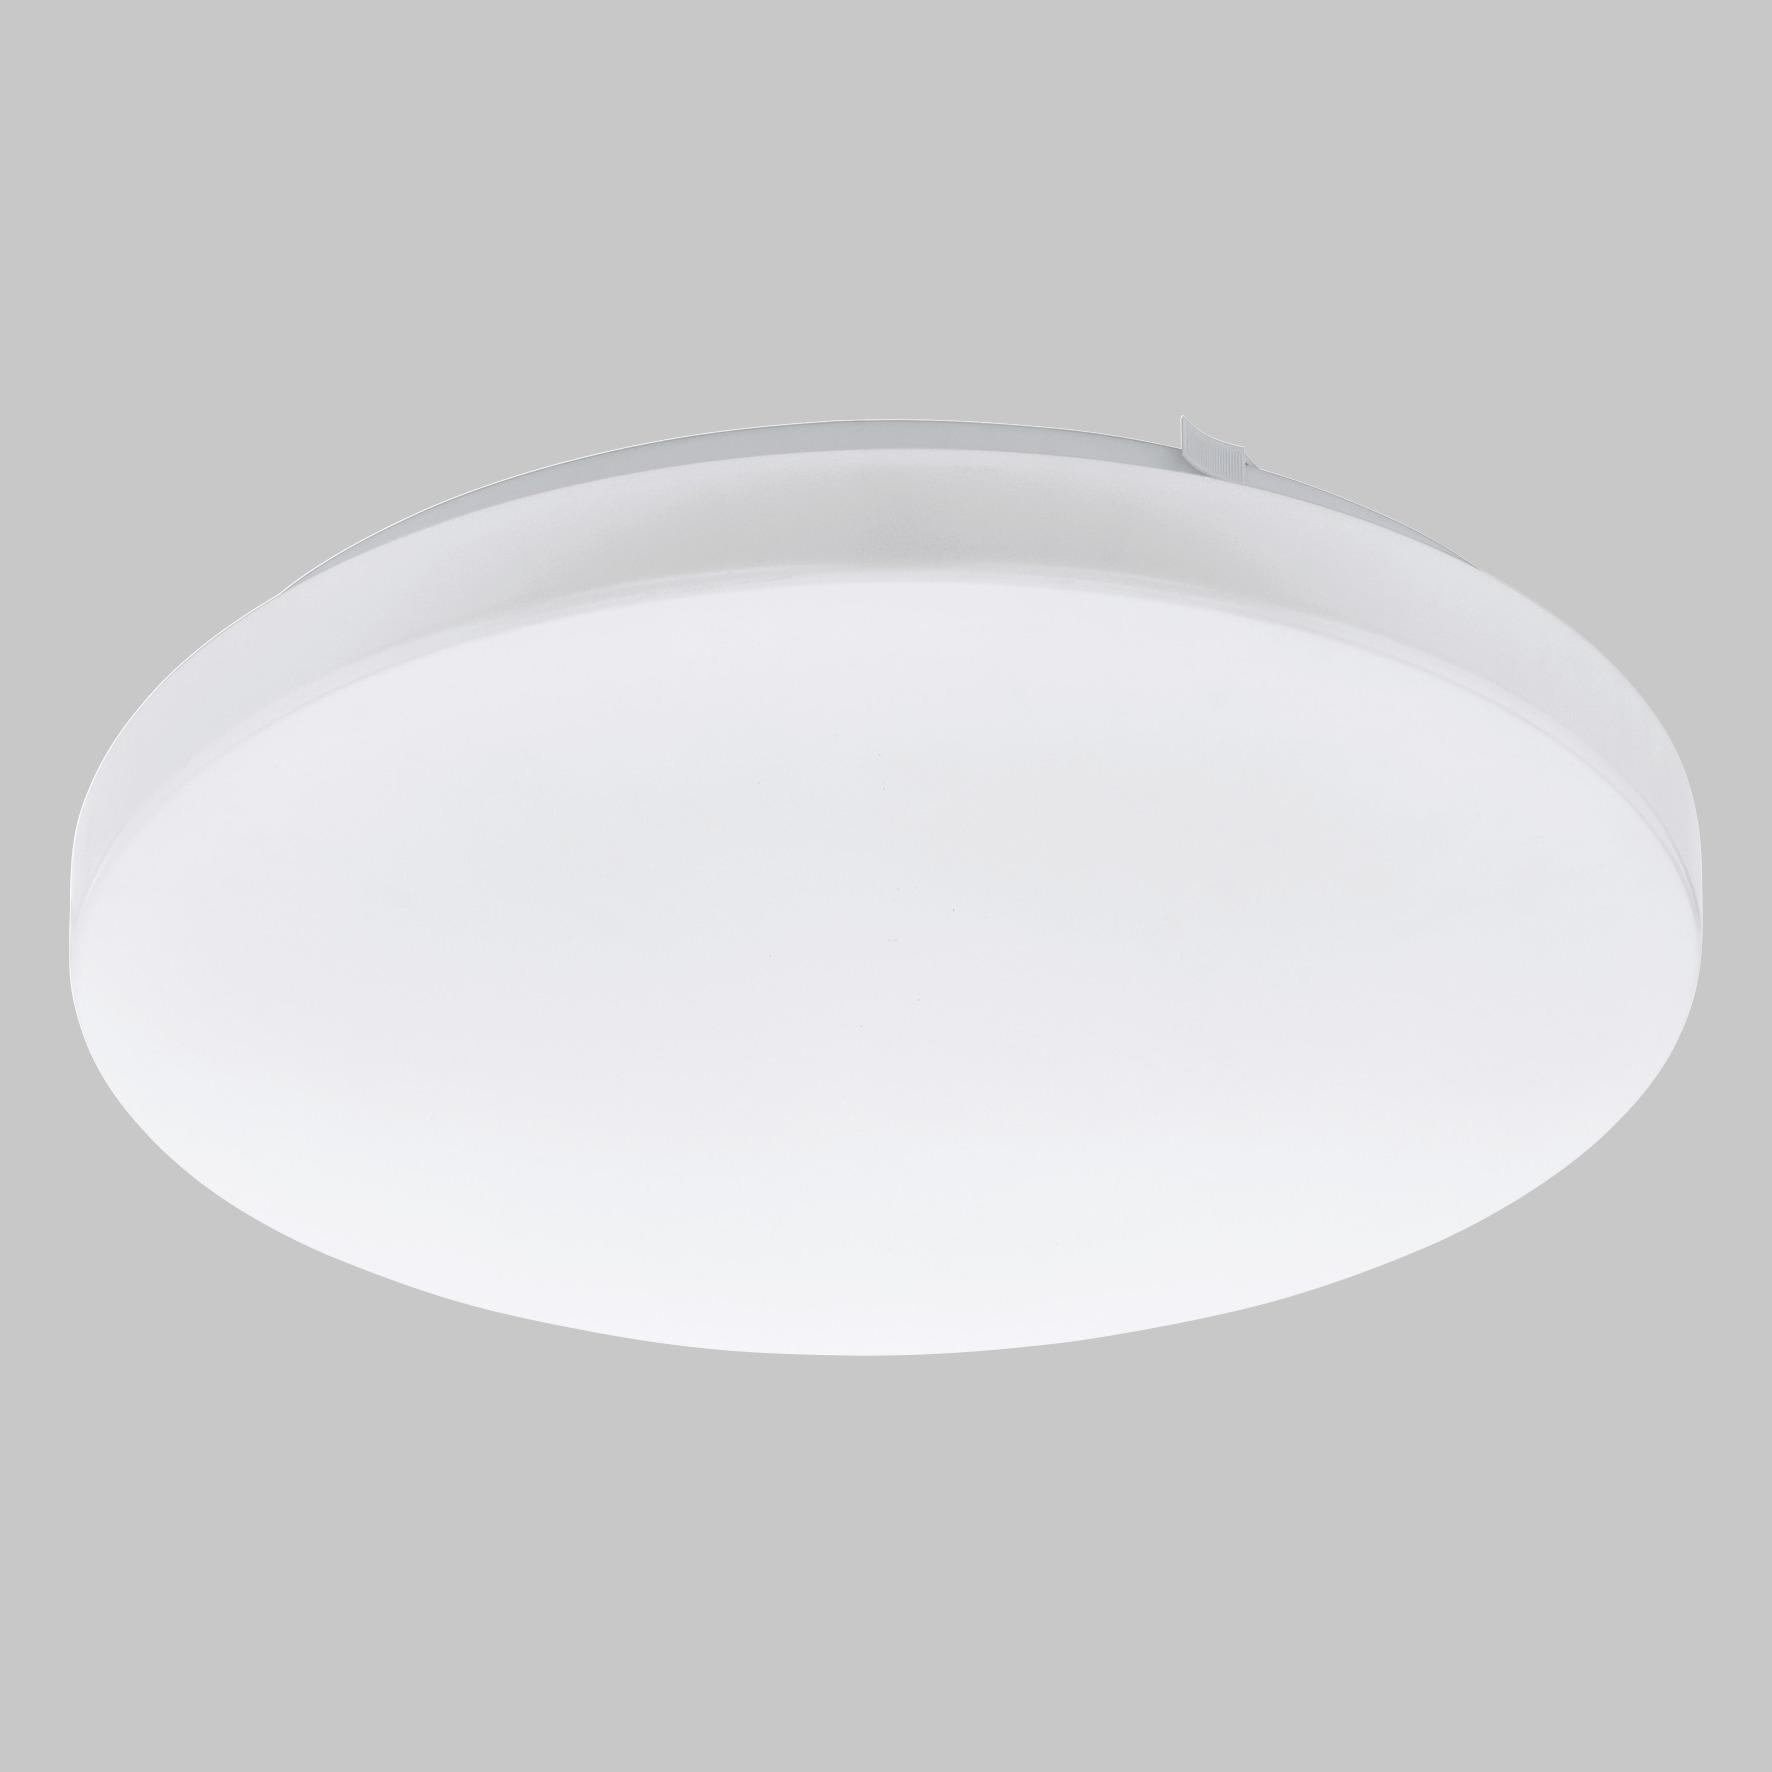 LED-Deckenleuchte Frania Ø 33 cm - Weiß, MODERN, Kunststoff/Metall (33cm)